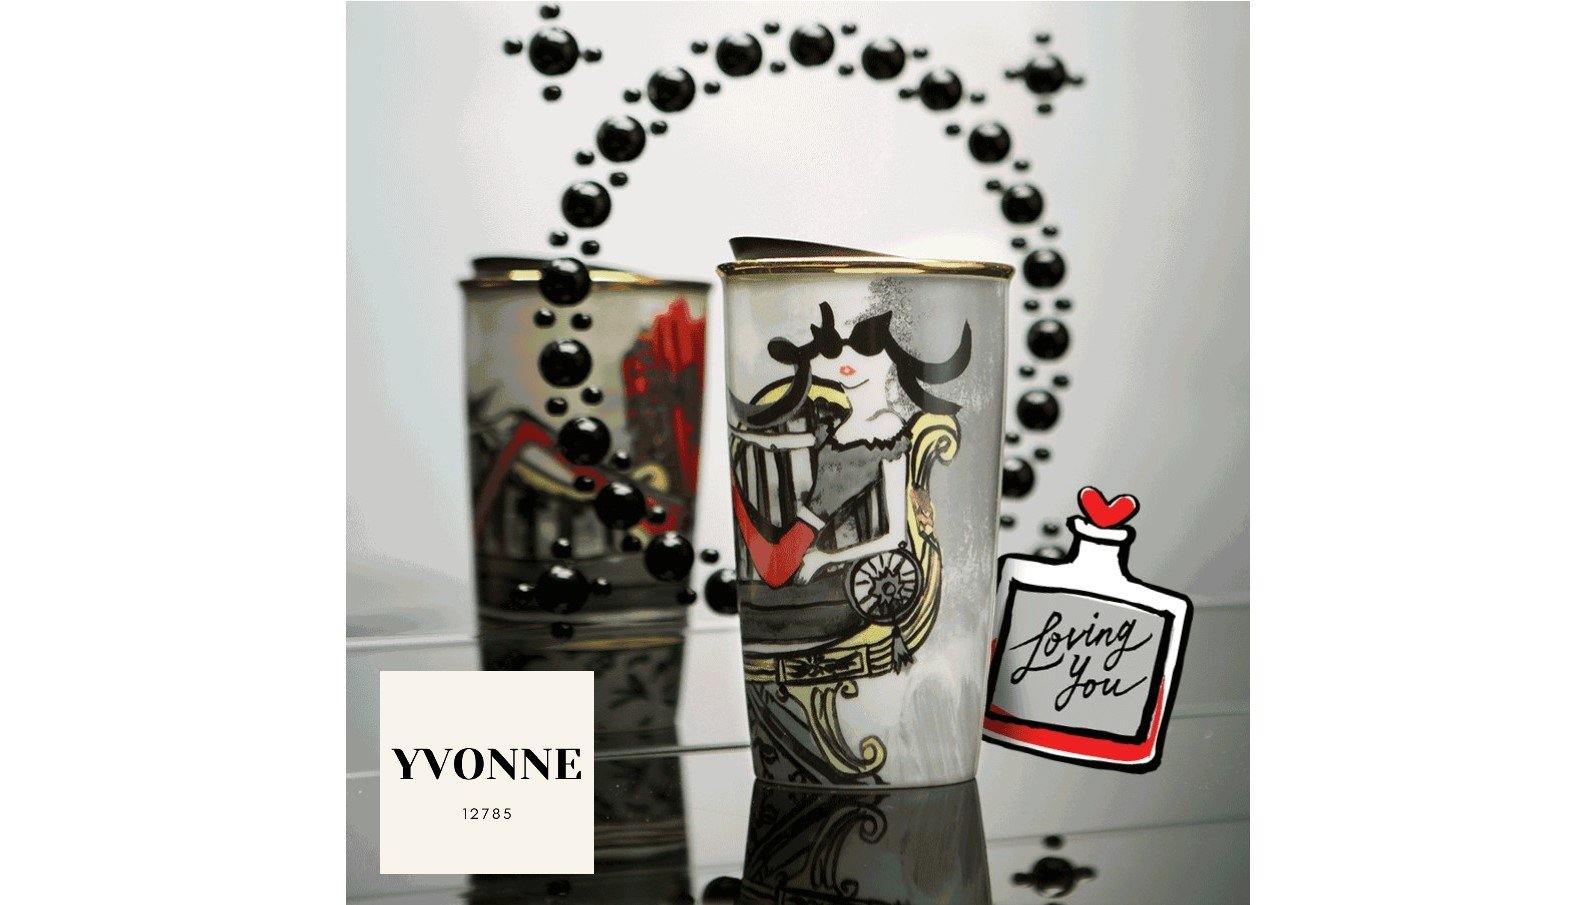 Starbucks 2017 Collaboration Illustration Ceramic Mug - Yvonne12785